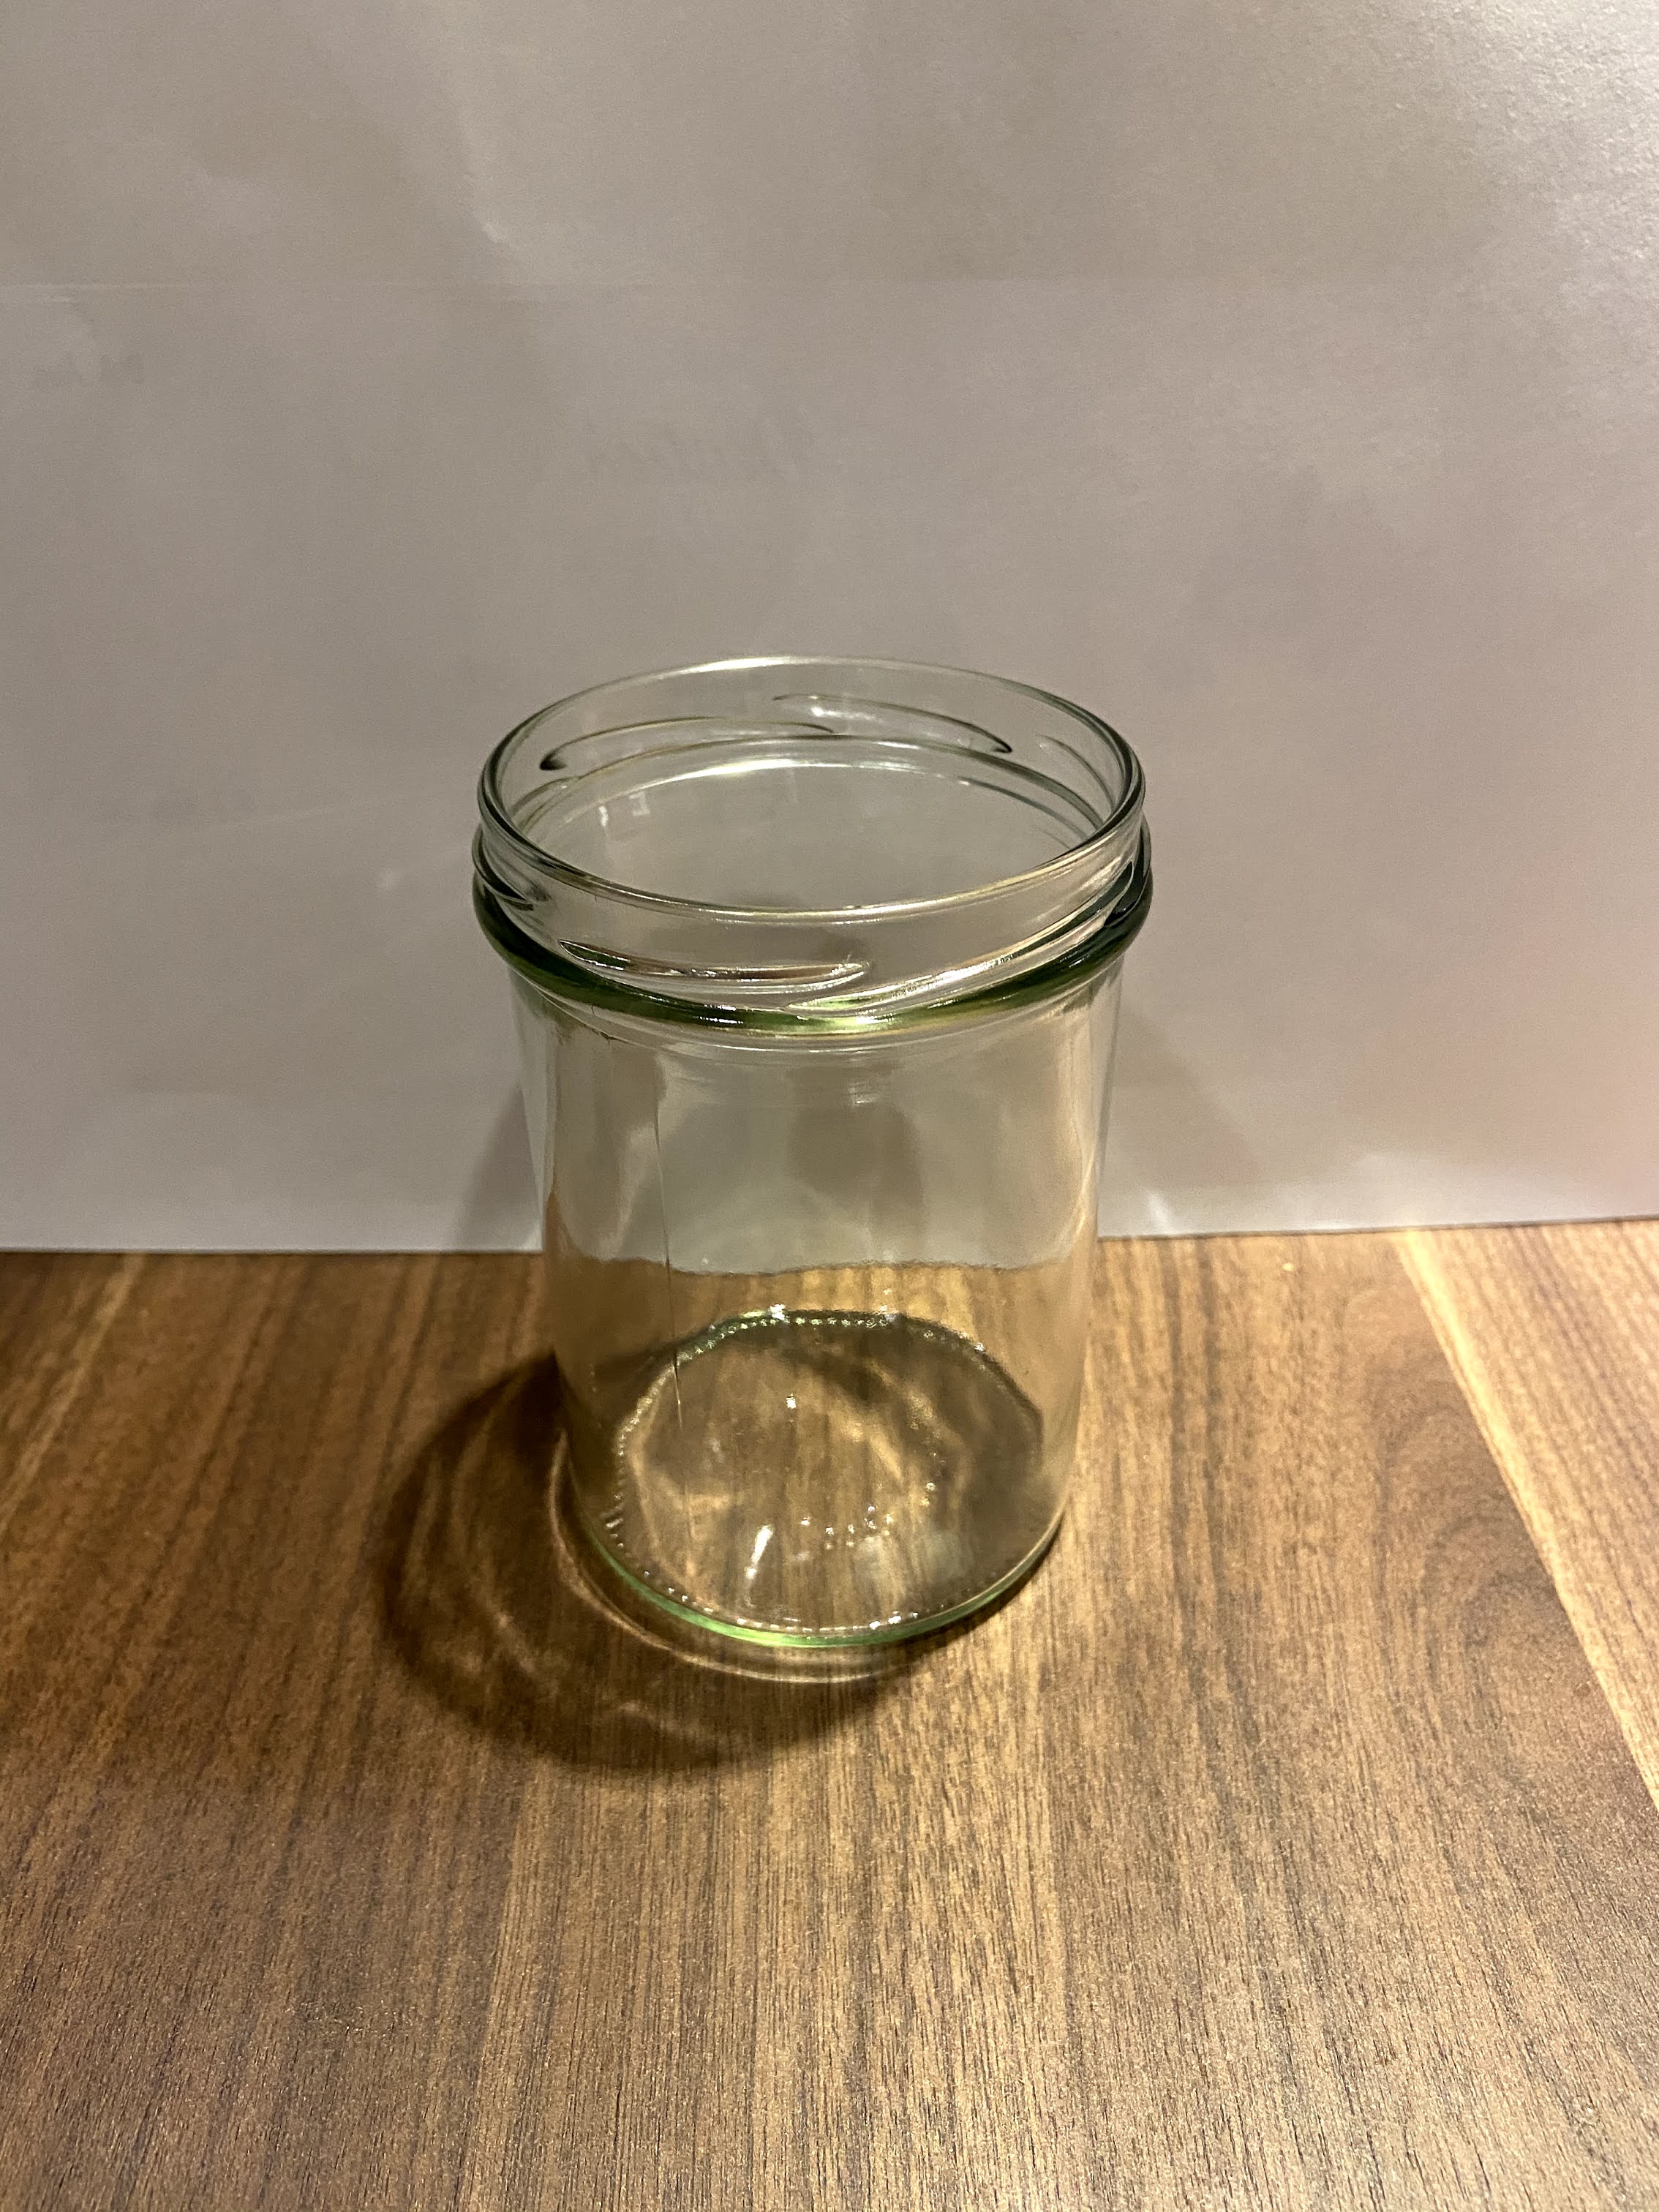 Honigglas